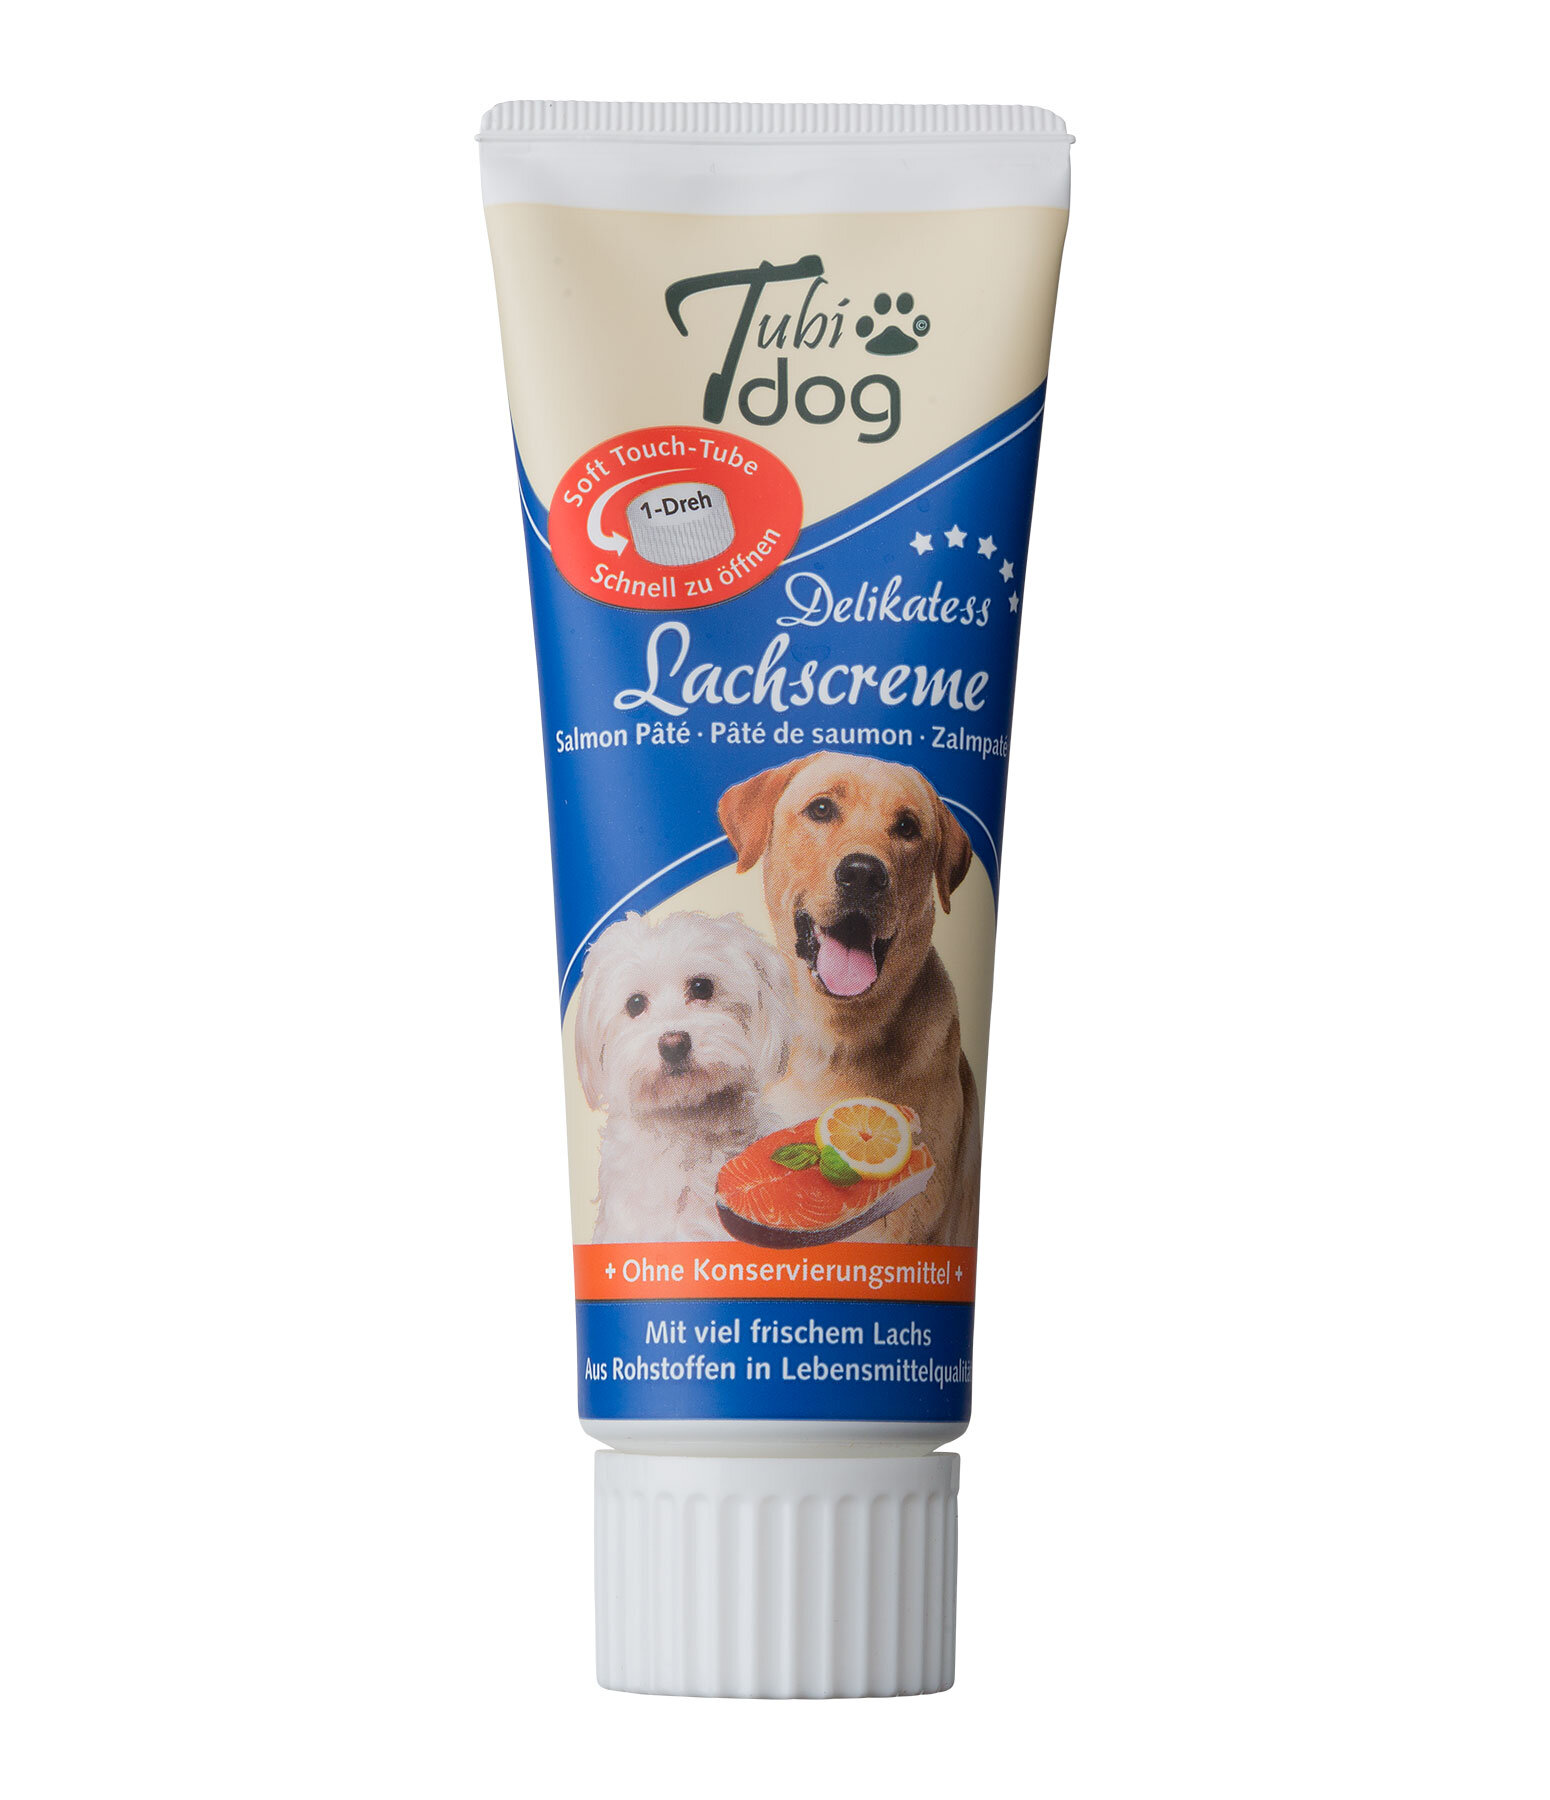 Delikatess Lachscreme für Hunde